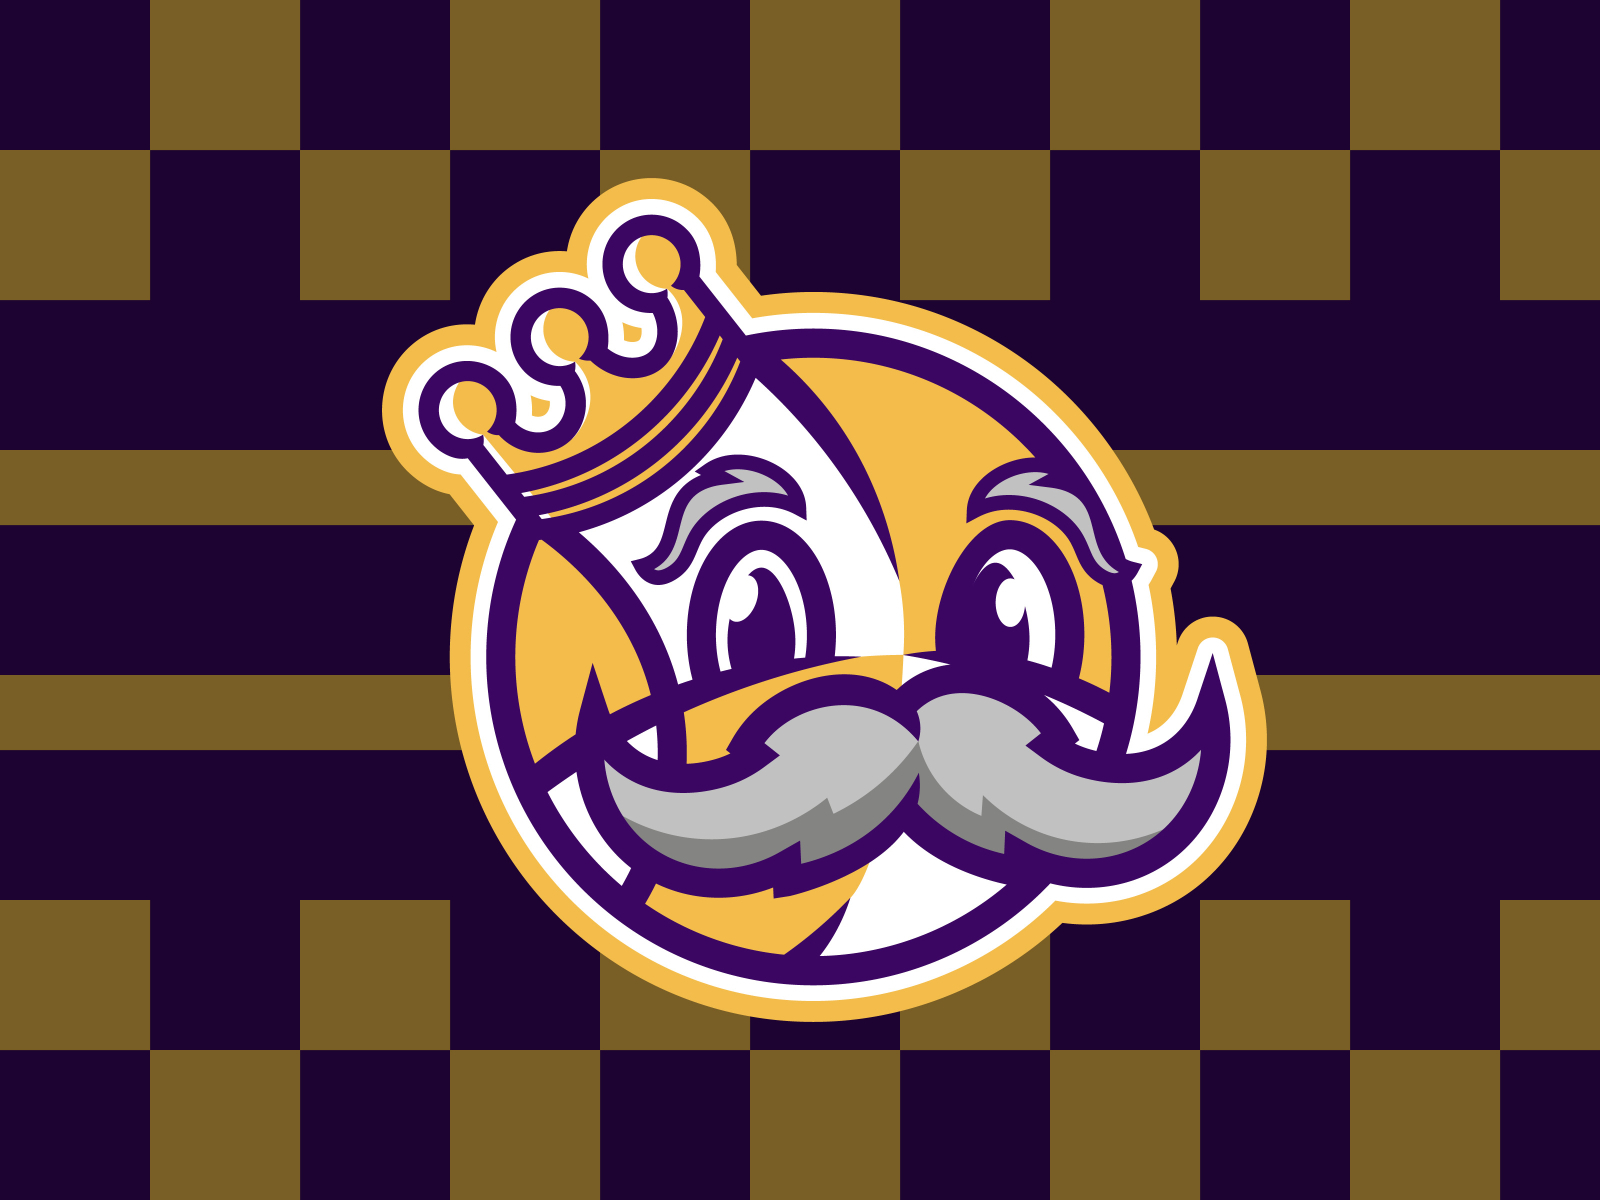 Defunct basketball team Cincinnati Royals emblem vintage royal